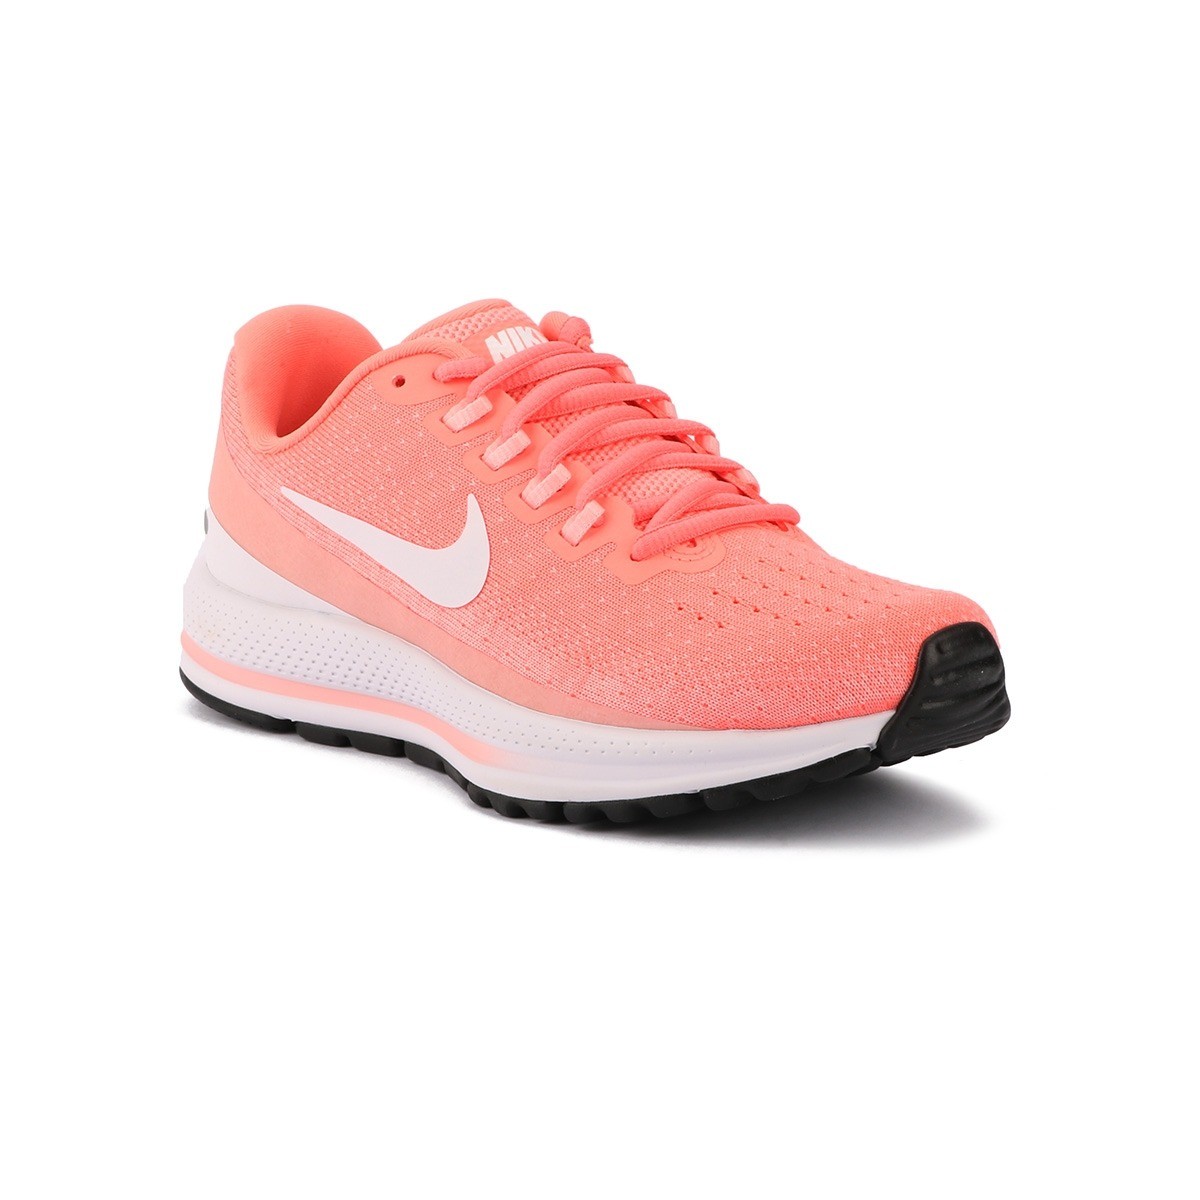 Línea de metal Química síndrome Nike Zapatillas Wmns Air Zoom Vomero 13 LT Atomic Pink White Rosa Mujer